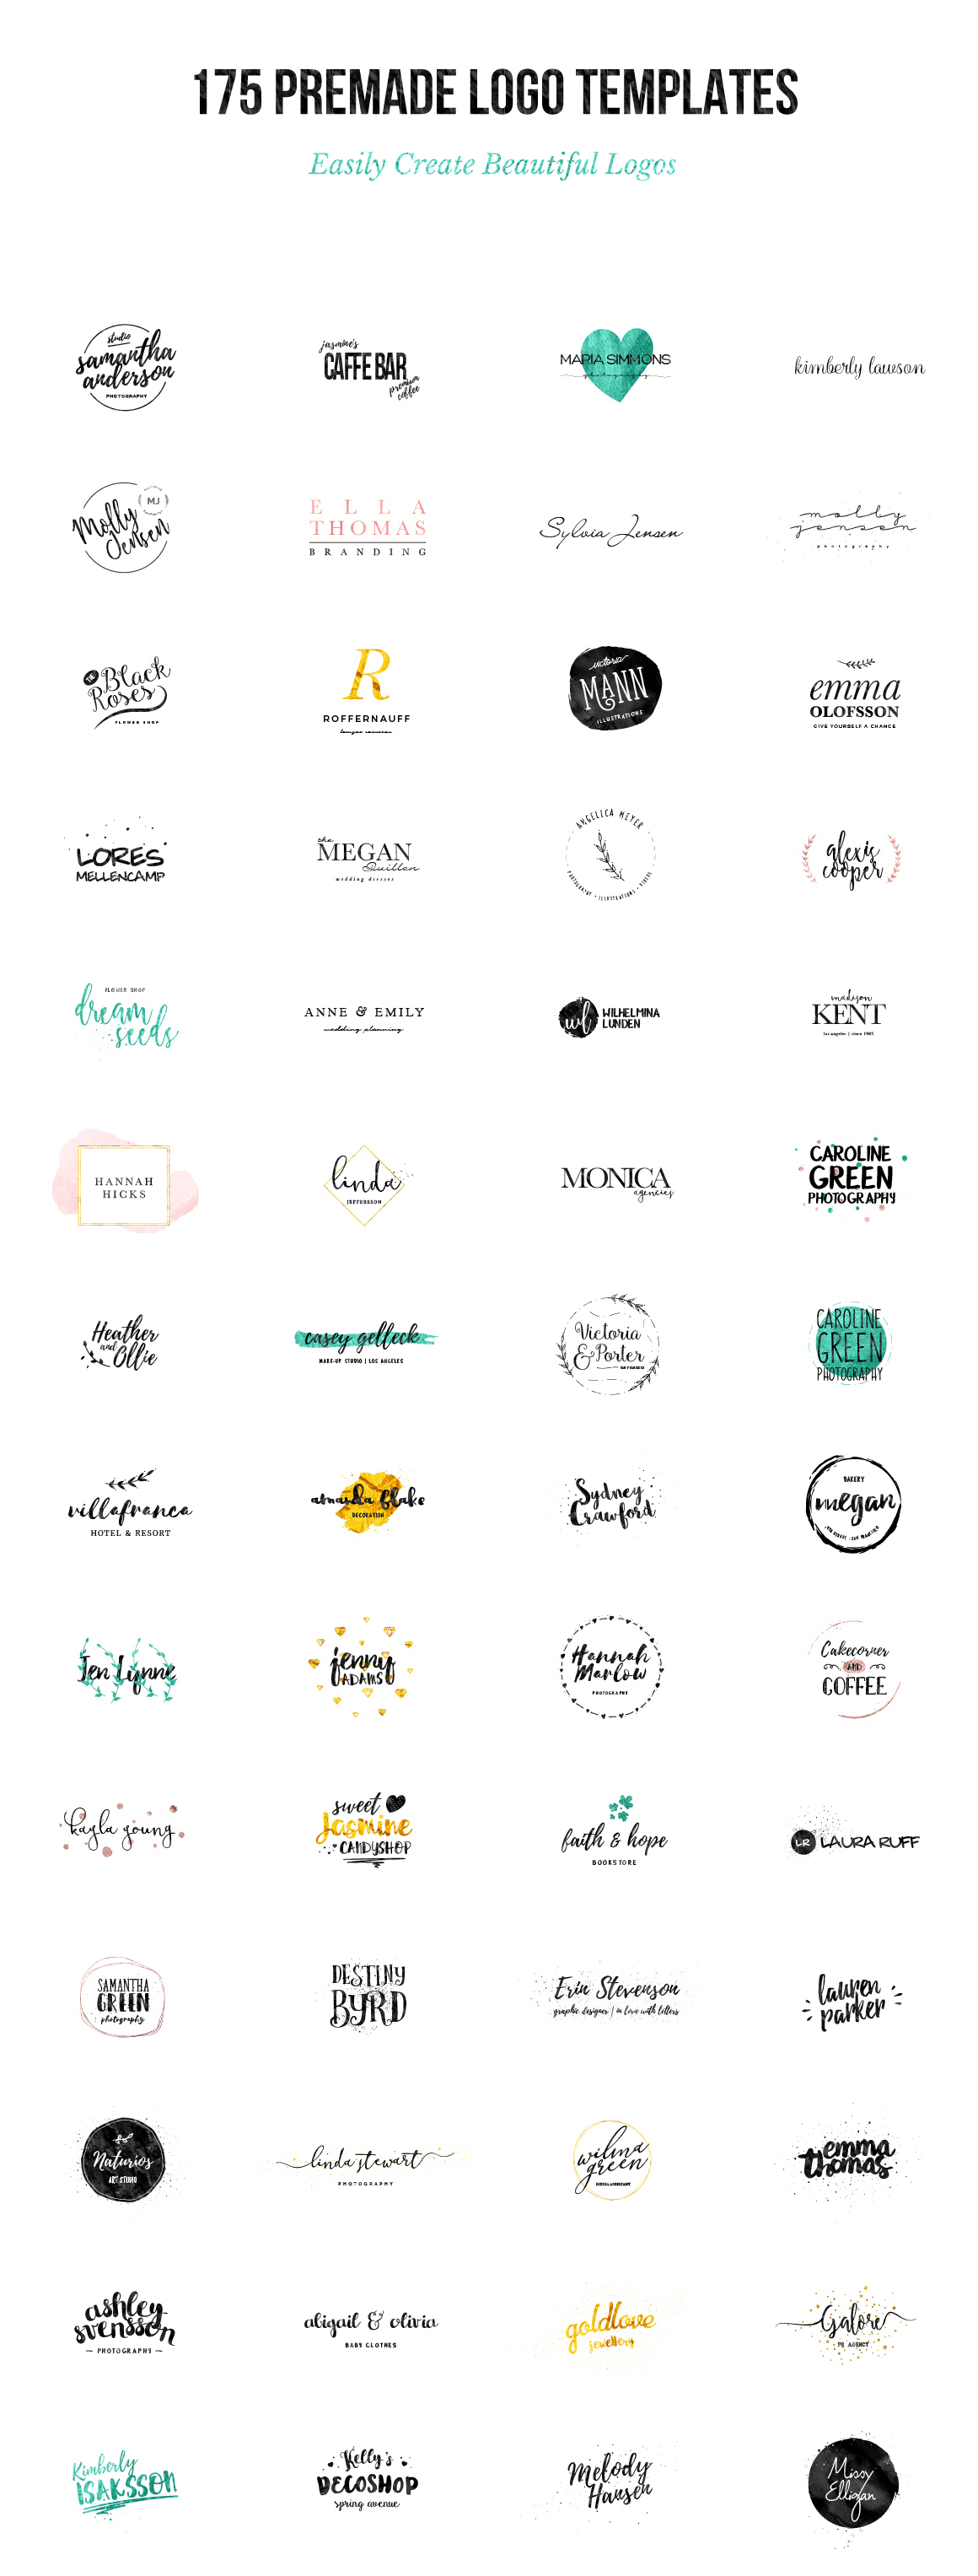 logo logos feminine Illustrator photoshop template Pack textures inspiration creative